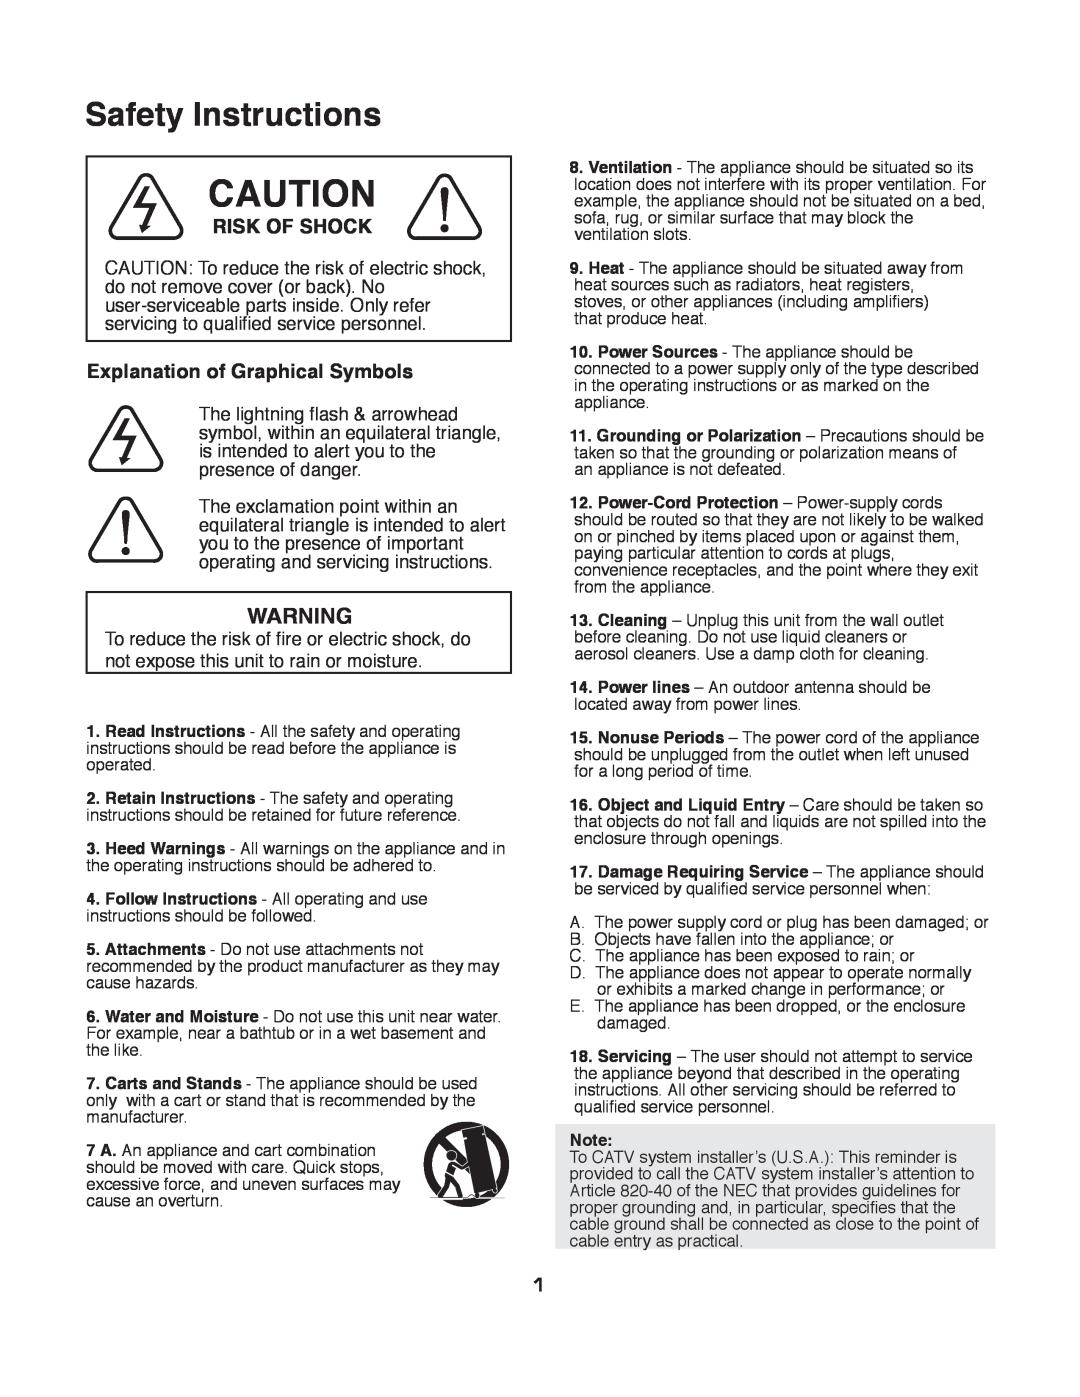 VocoPro DA-3700 owner manual Risk Of Shock, Explanation of Graphical Symbols, Safety Instructions 